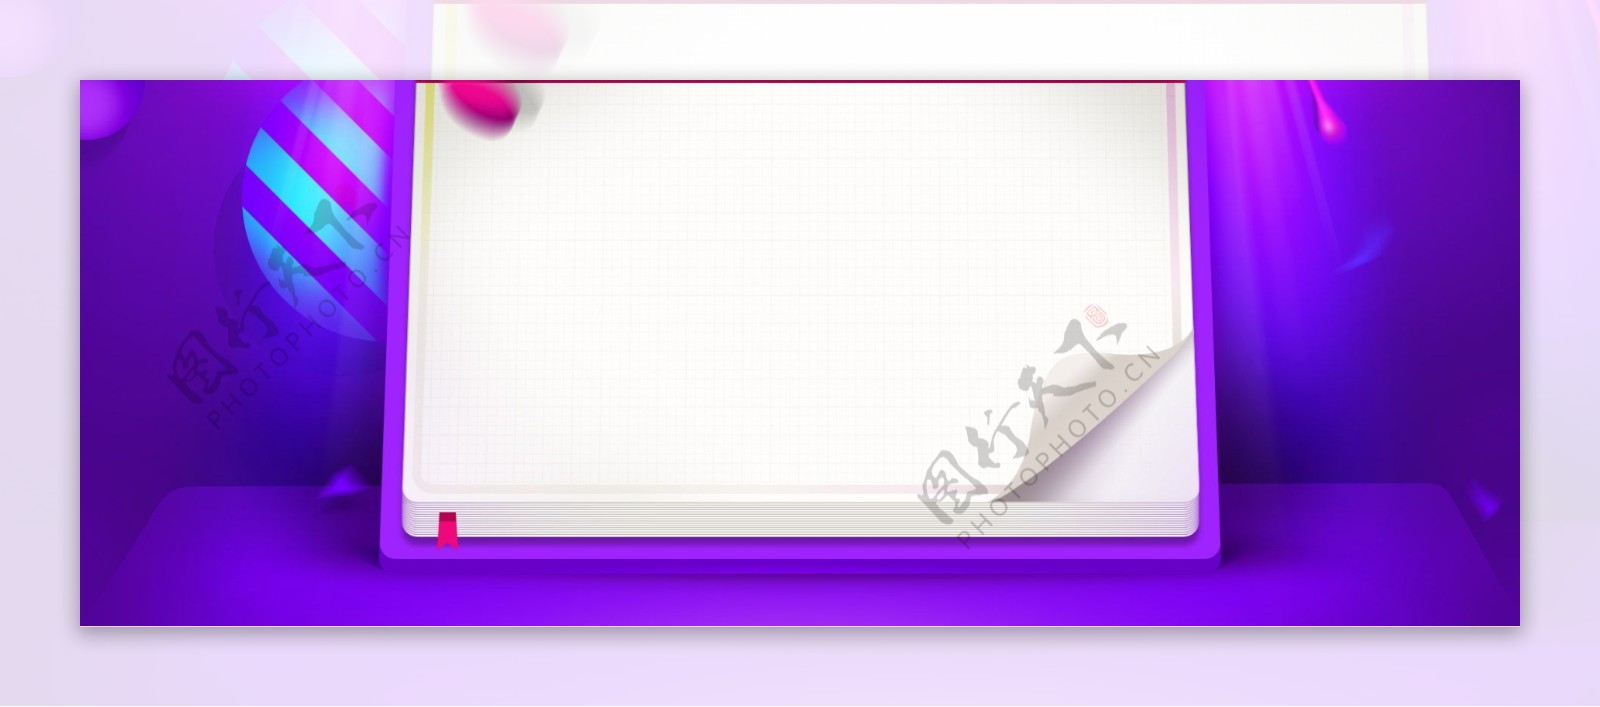 紫色条纹几何banner背景